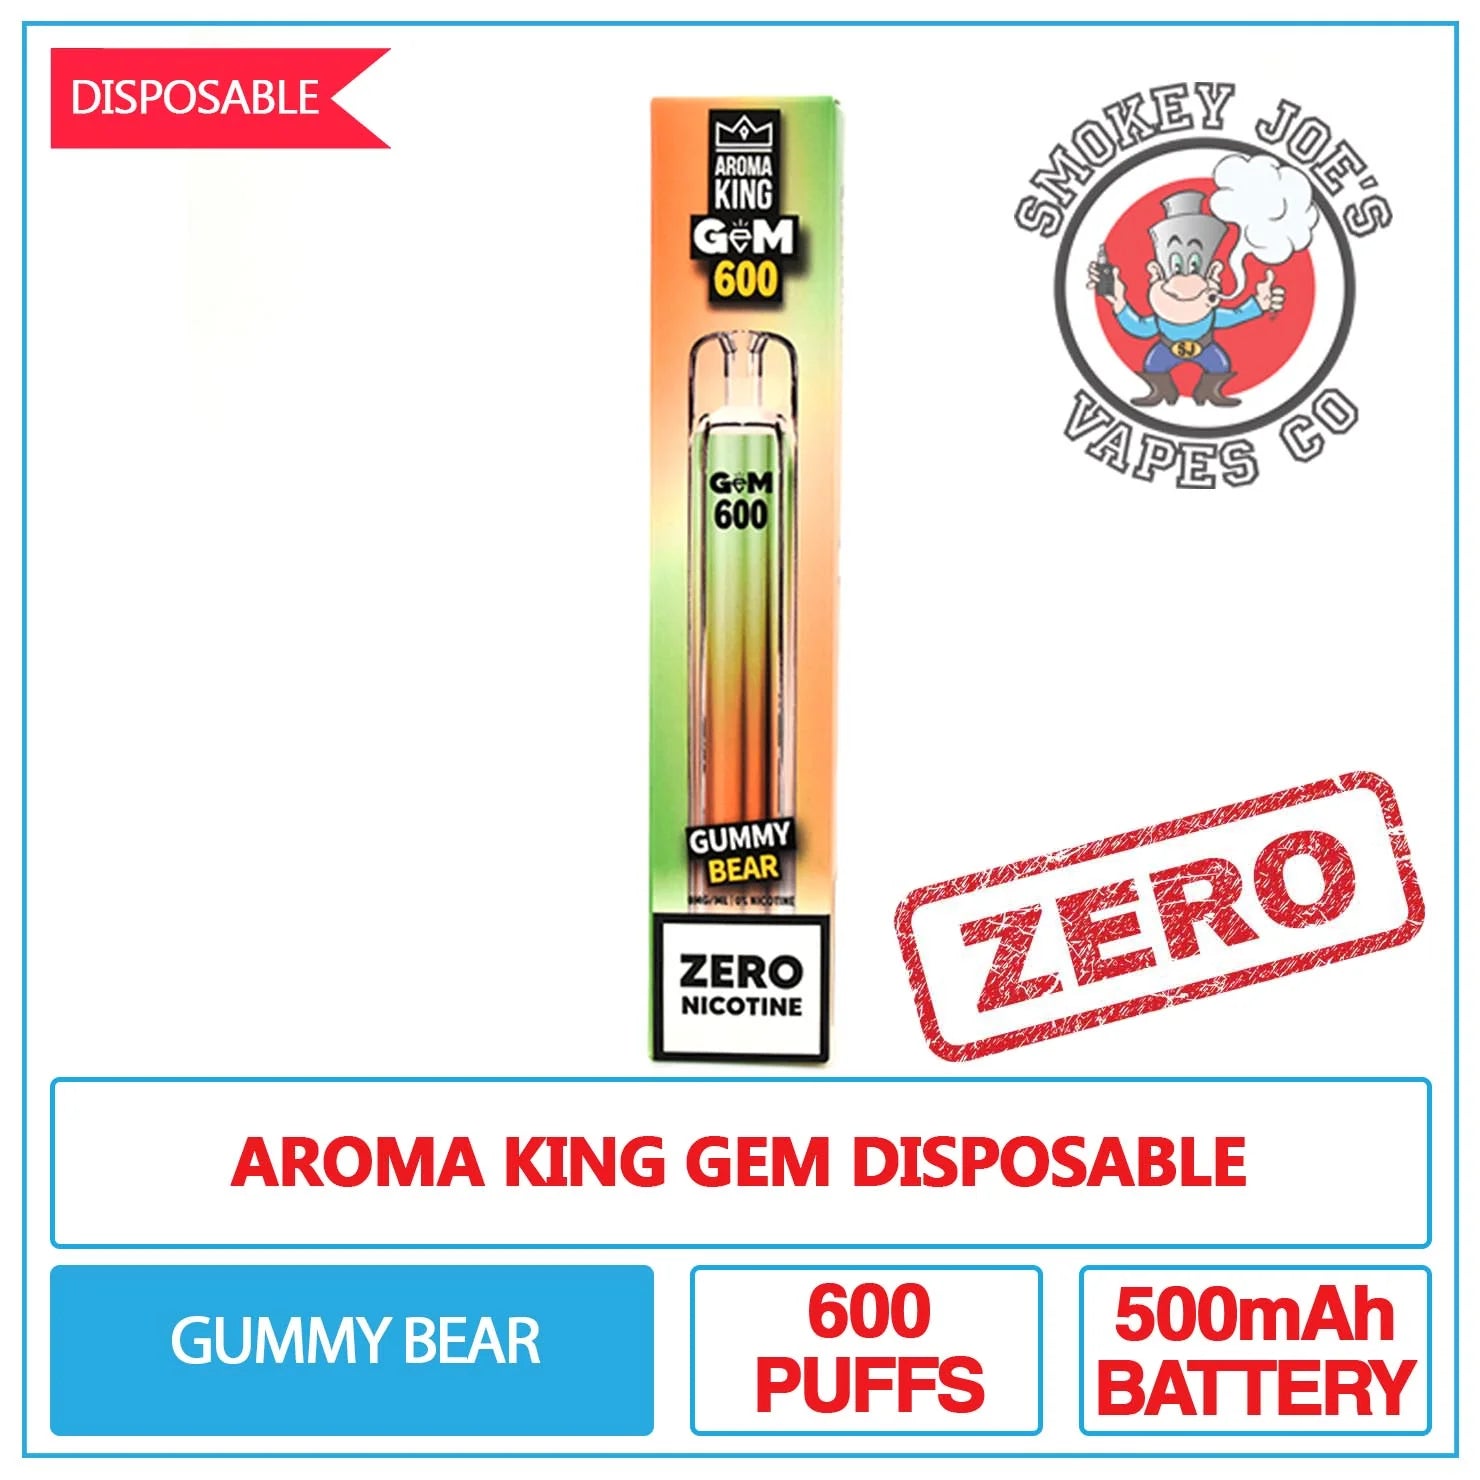 Aroma King Gem Disposable Gummy Bear | Smokey Joes Vapes Co